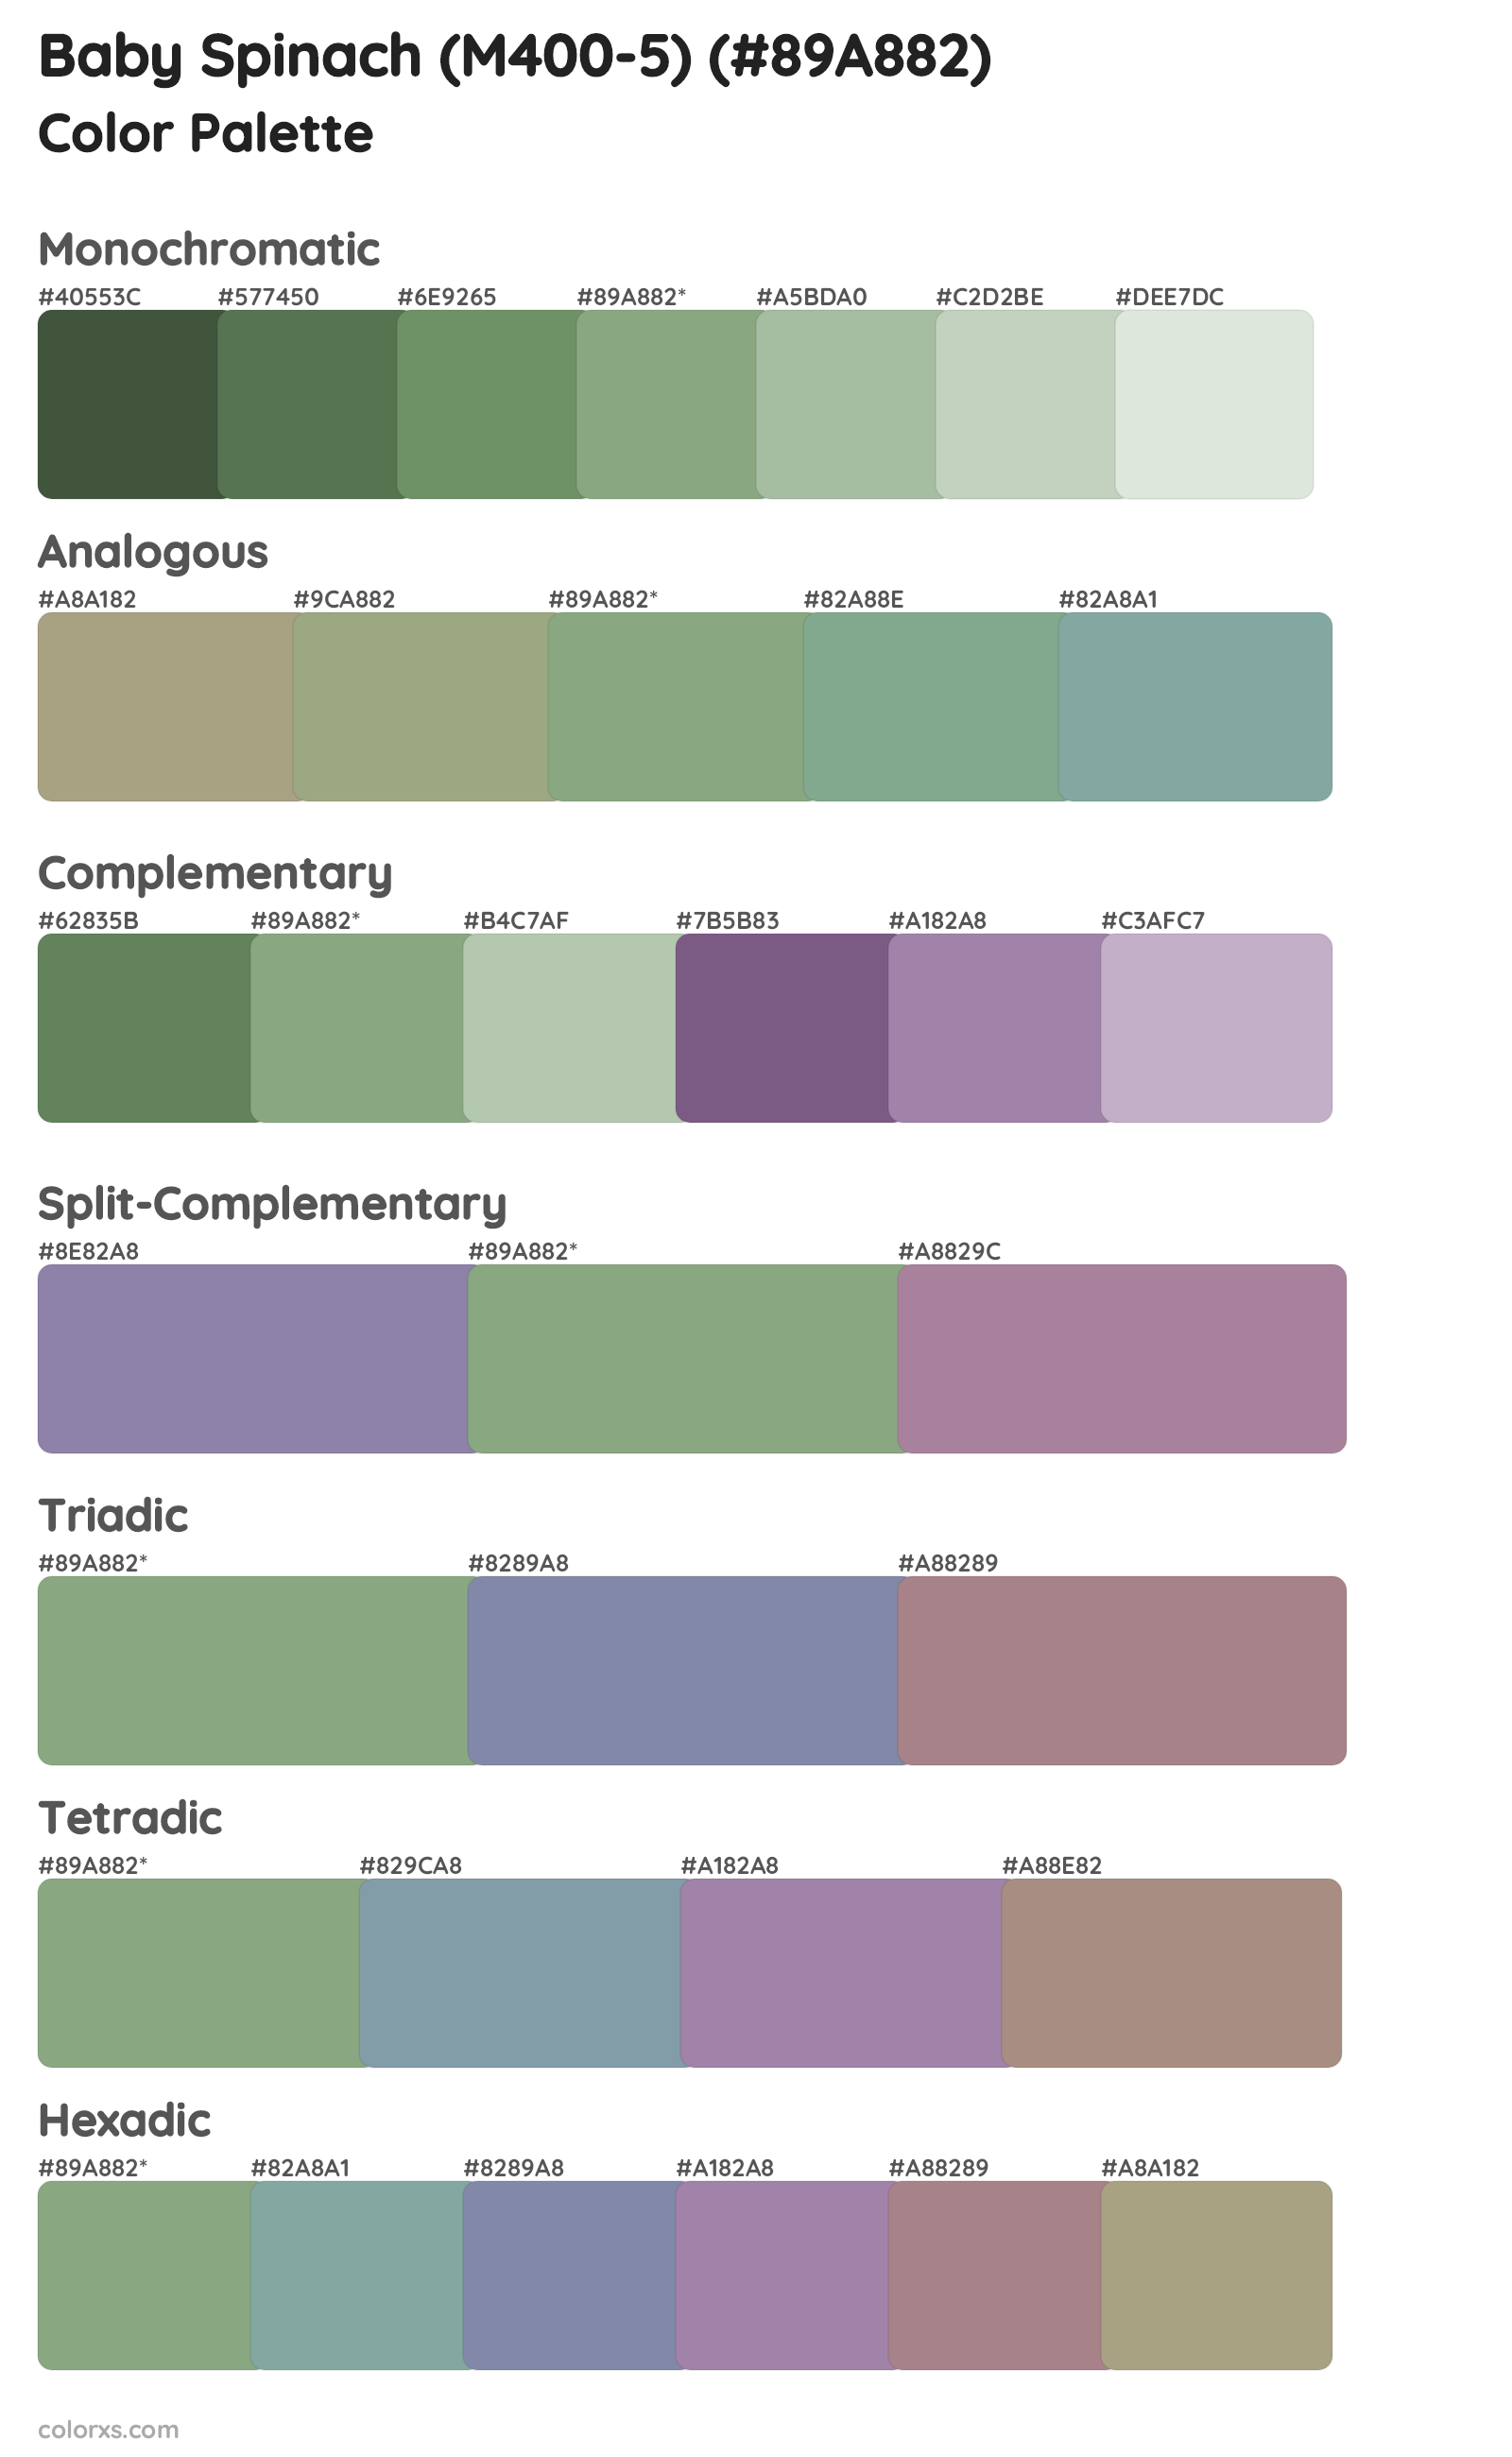 Baby Spinach (M400-5) Color Scheme Palettes